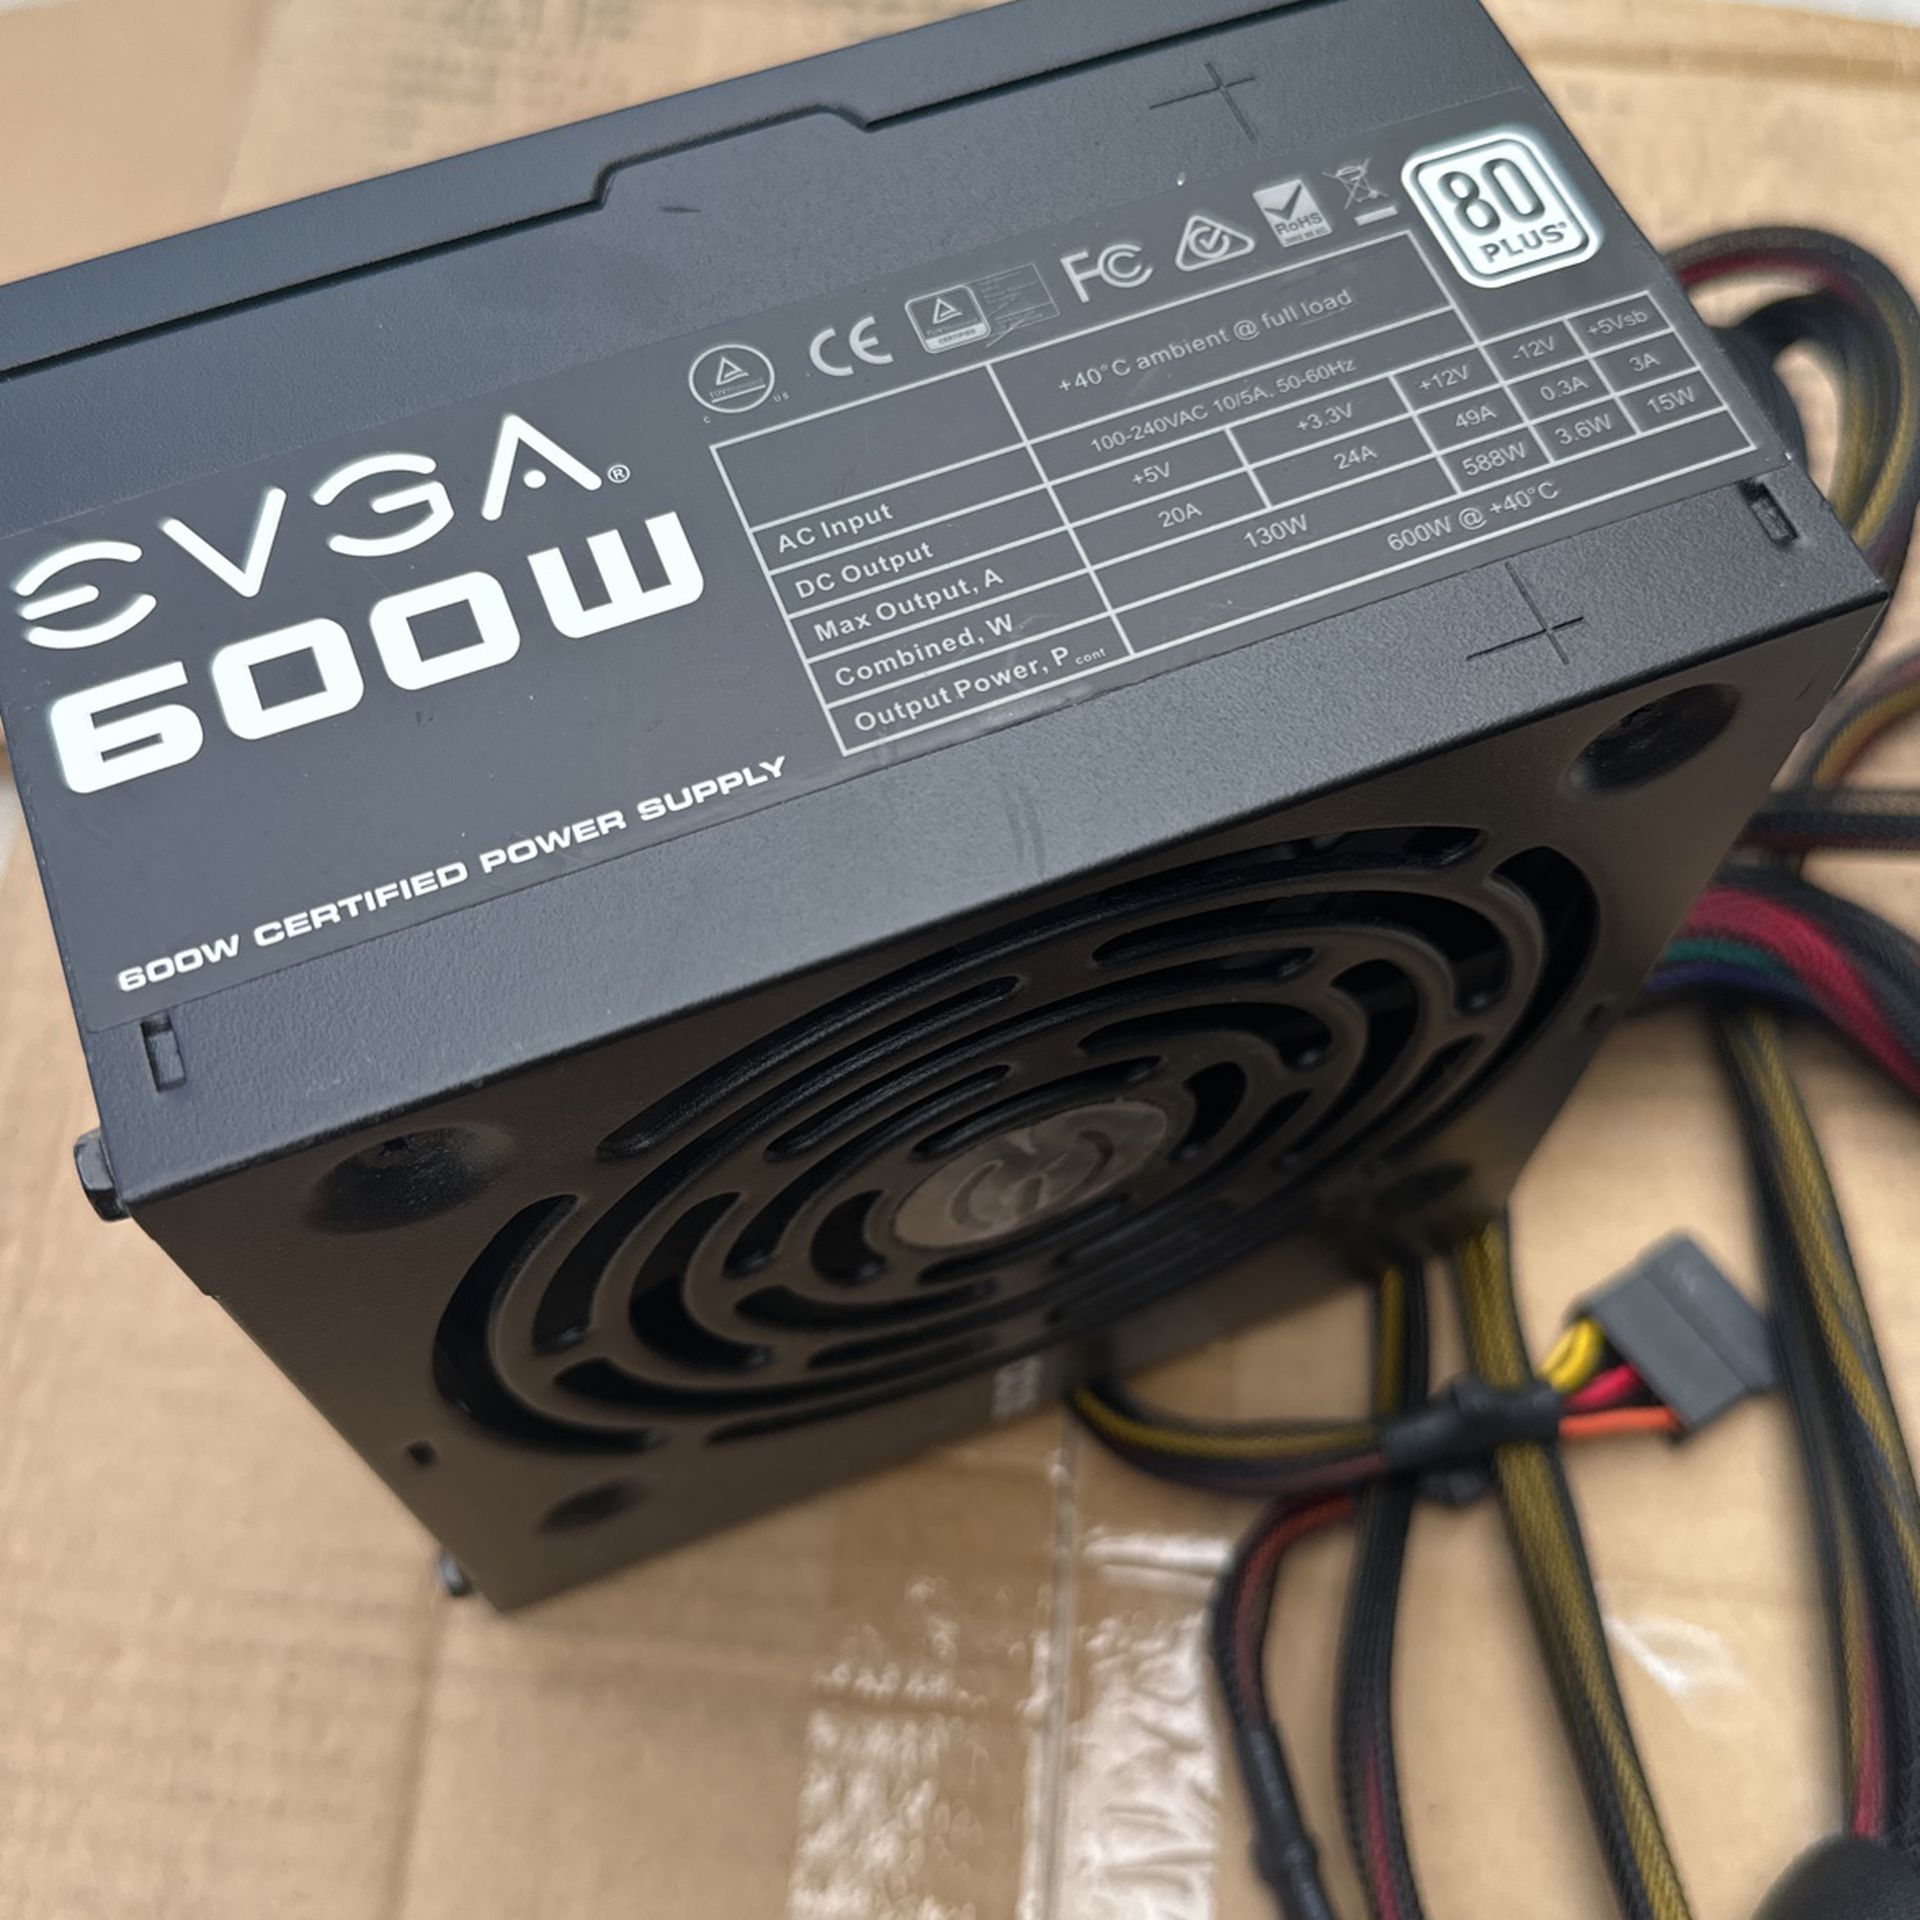 New/Open box EVGA 600w Power Supply